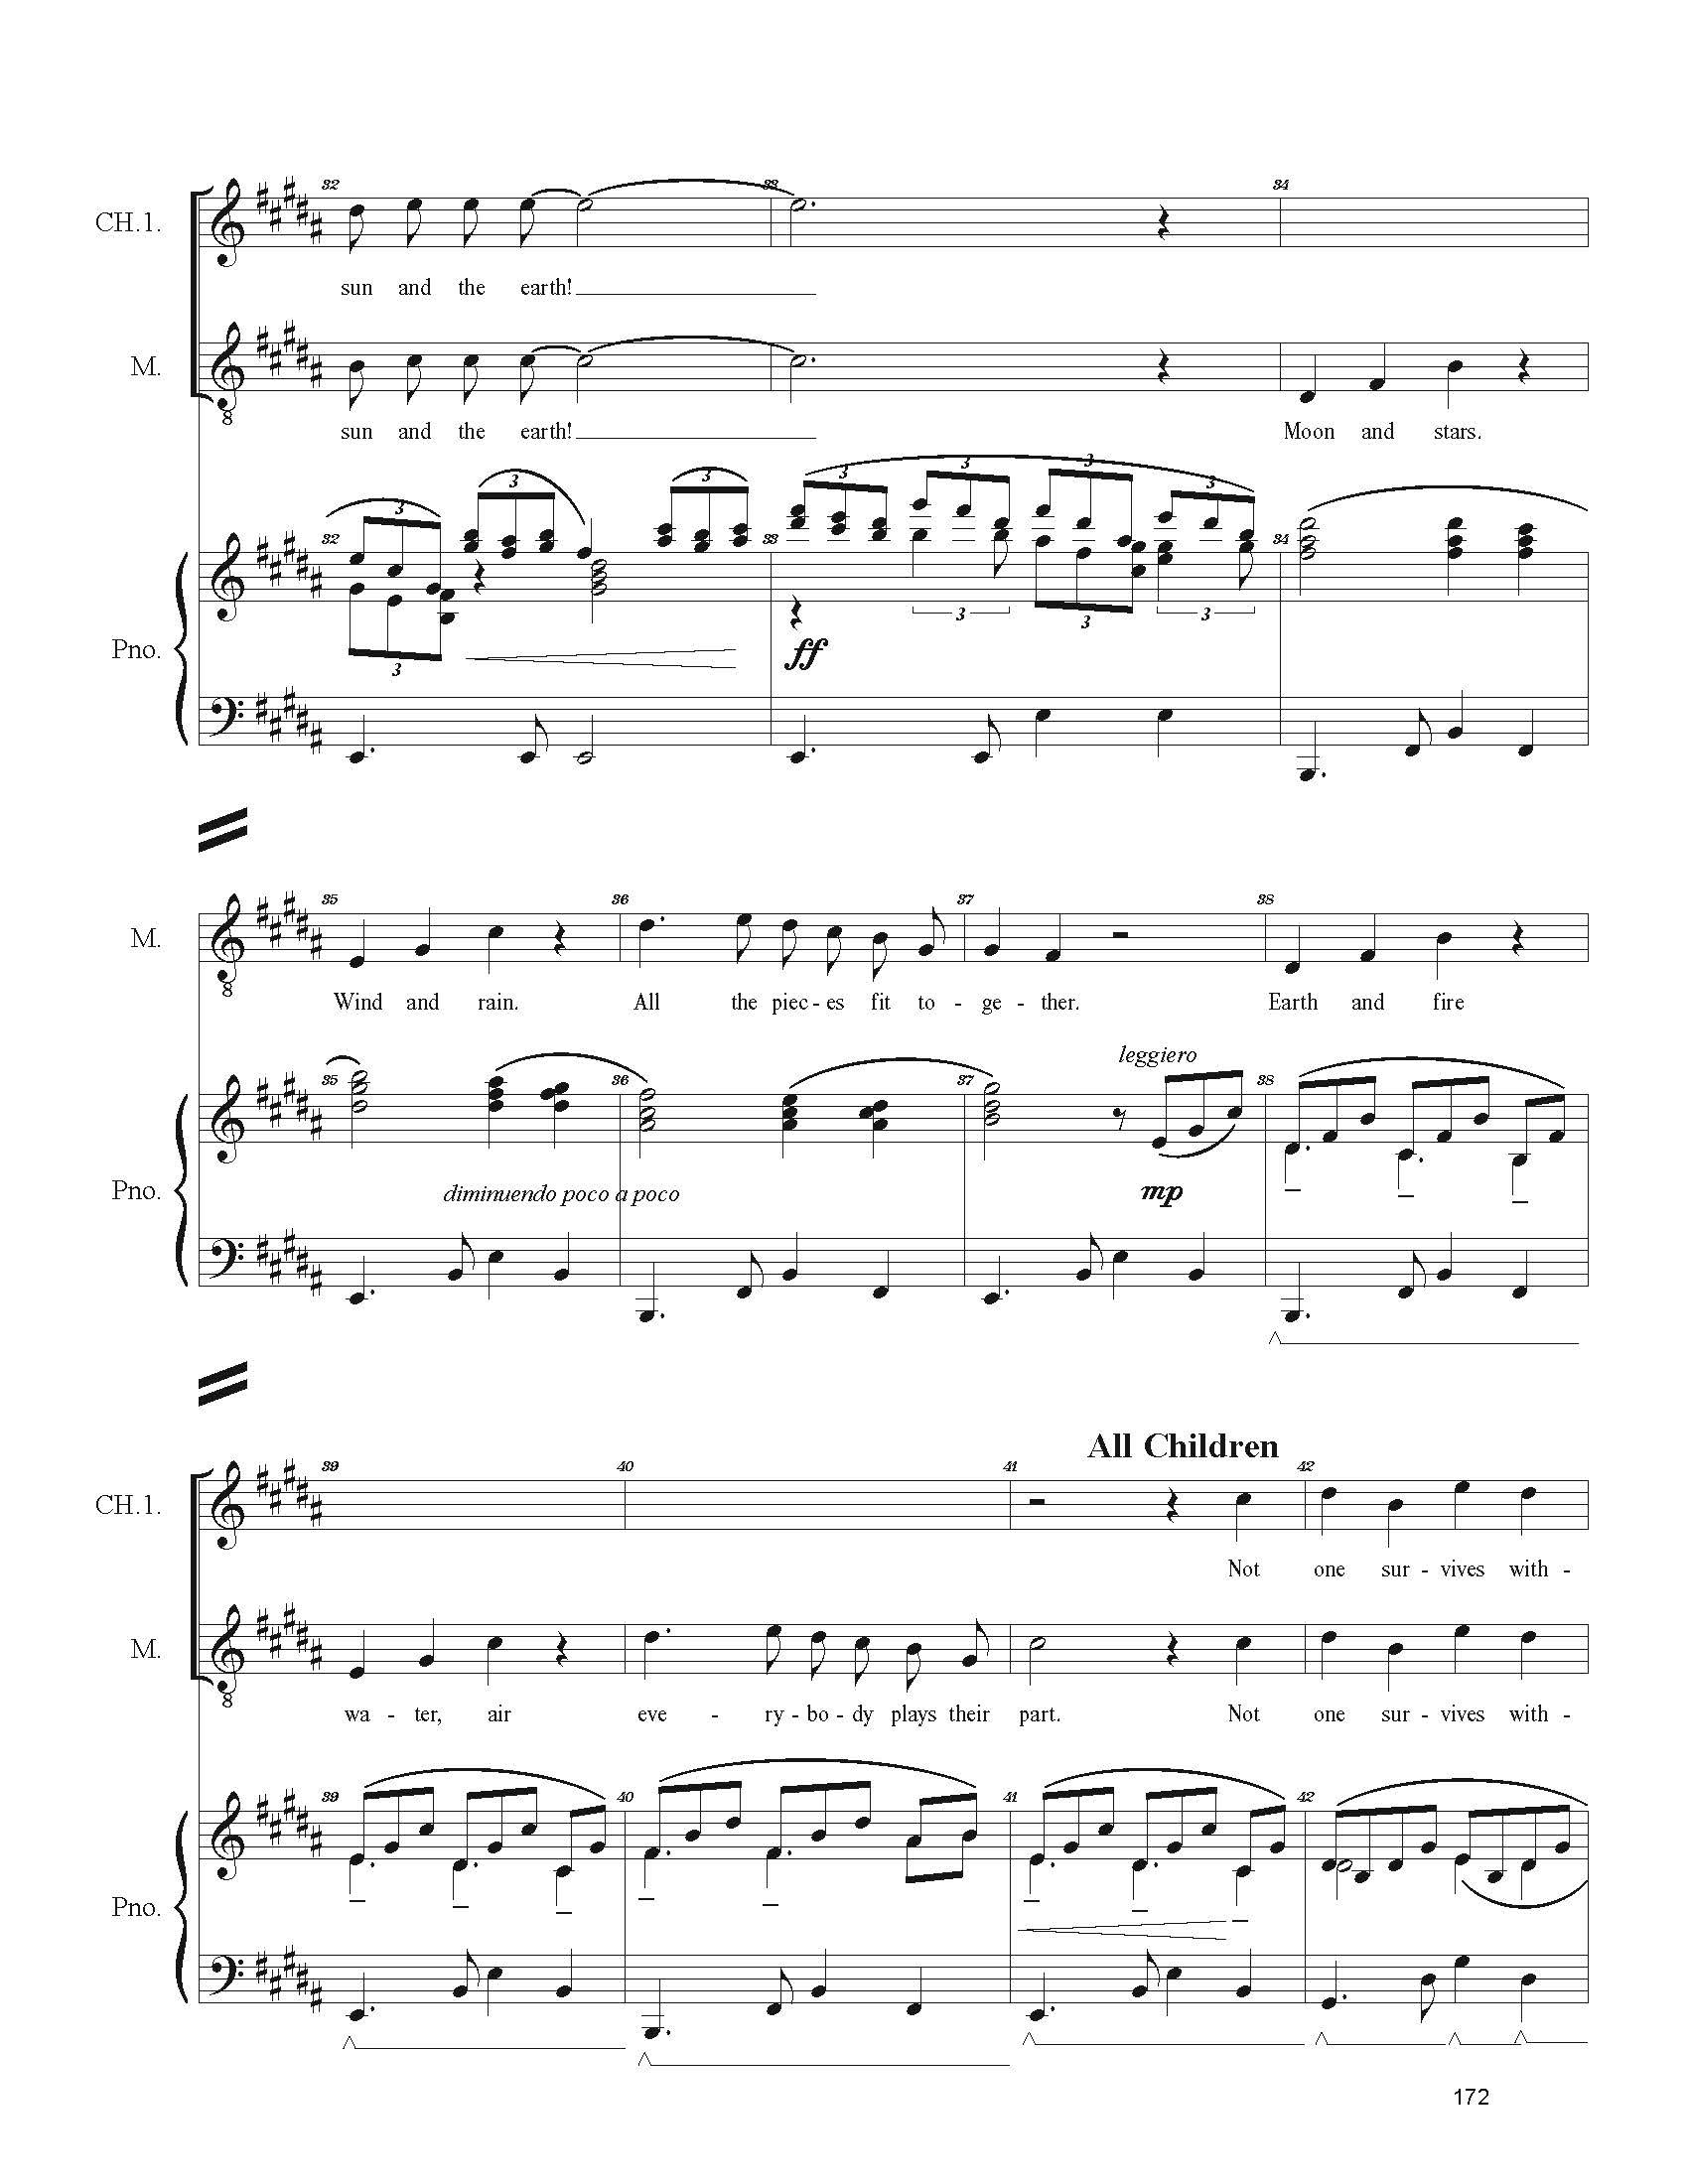 FULL PIANO VOCAL SCORE DRAFT 1 - Score_Page_172.jpg